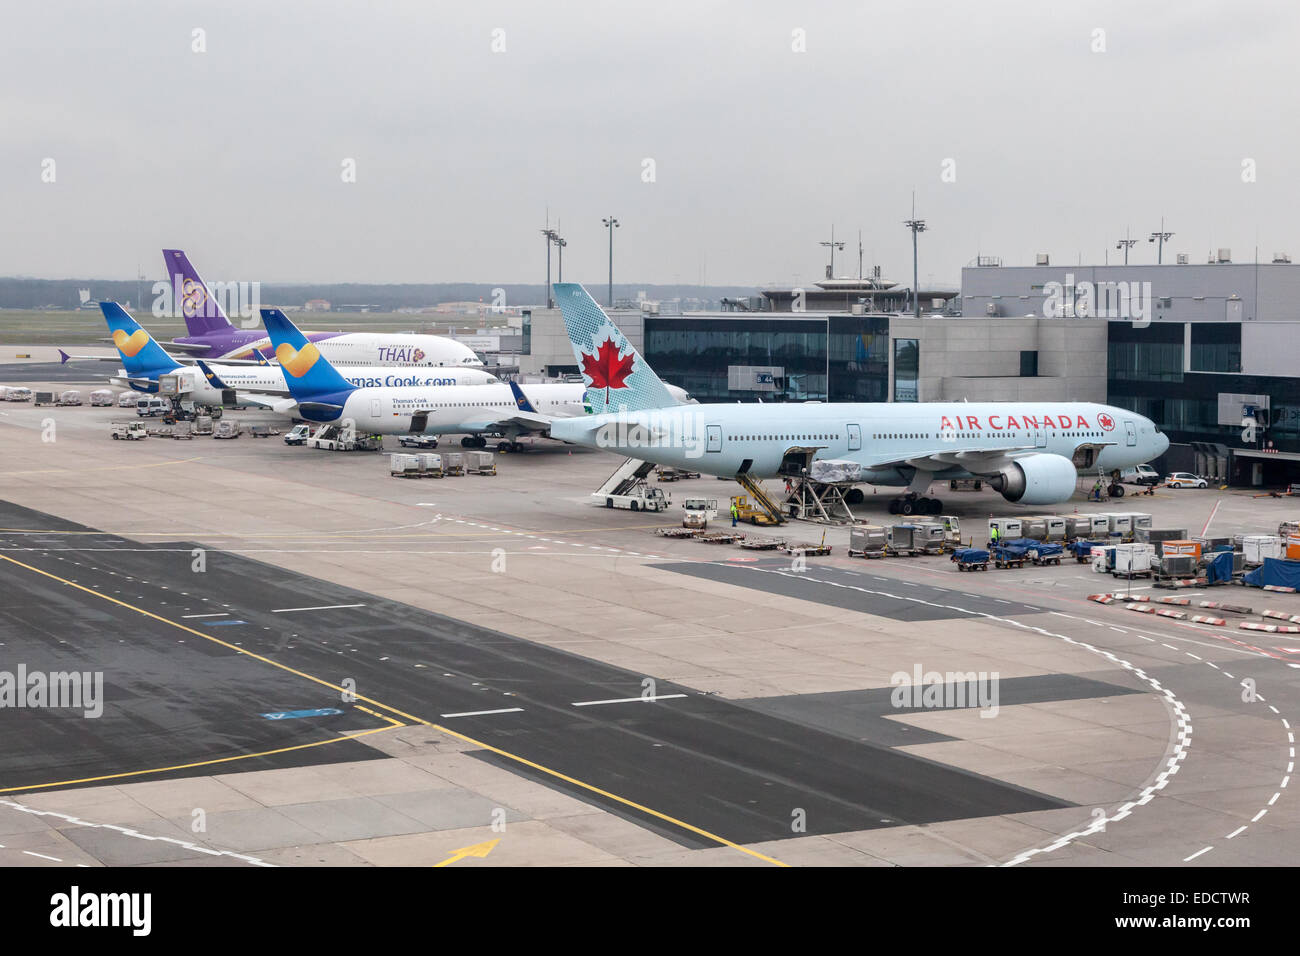 Air Canada, Thai and Thomas Cook airplanes at the Frankfurt International Airport Stock Photo